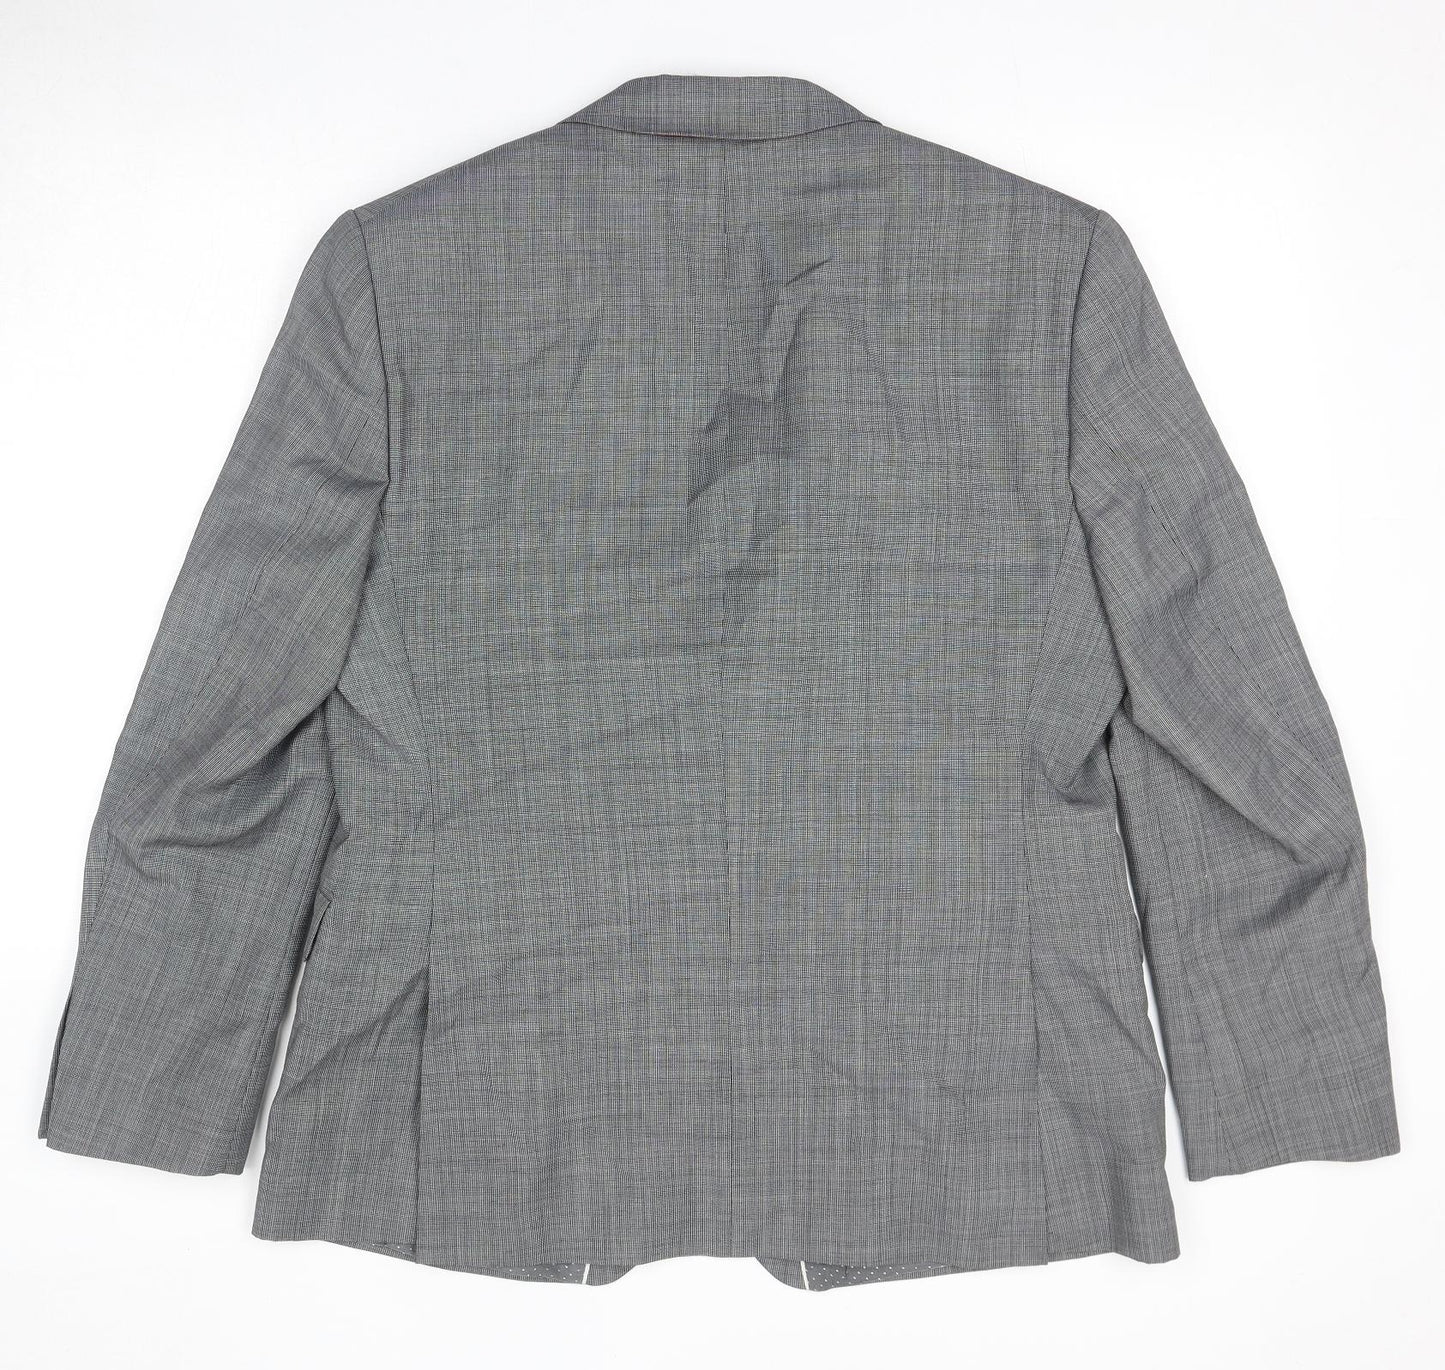 Jeff Banks Mens Grey Plaid Wool Jacket Suit Jacket Size 44 Regular